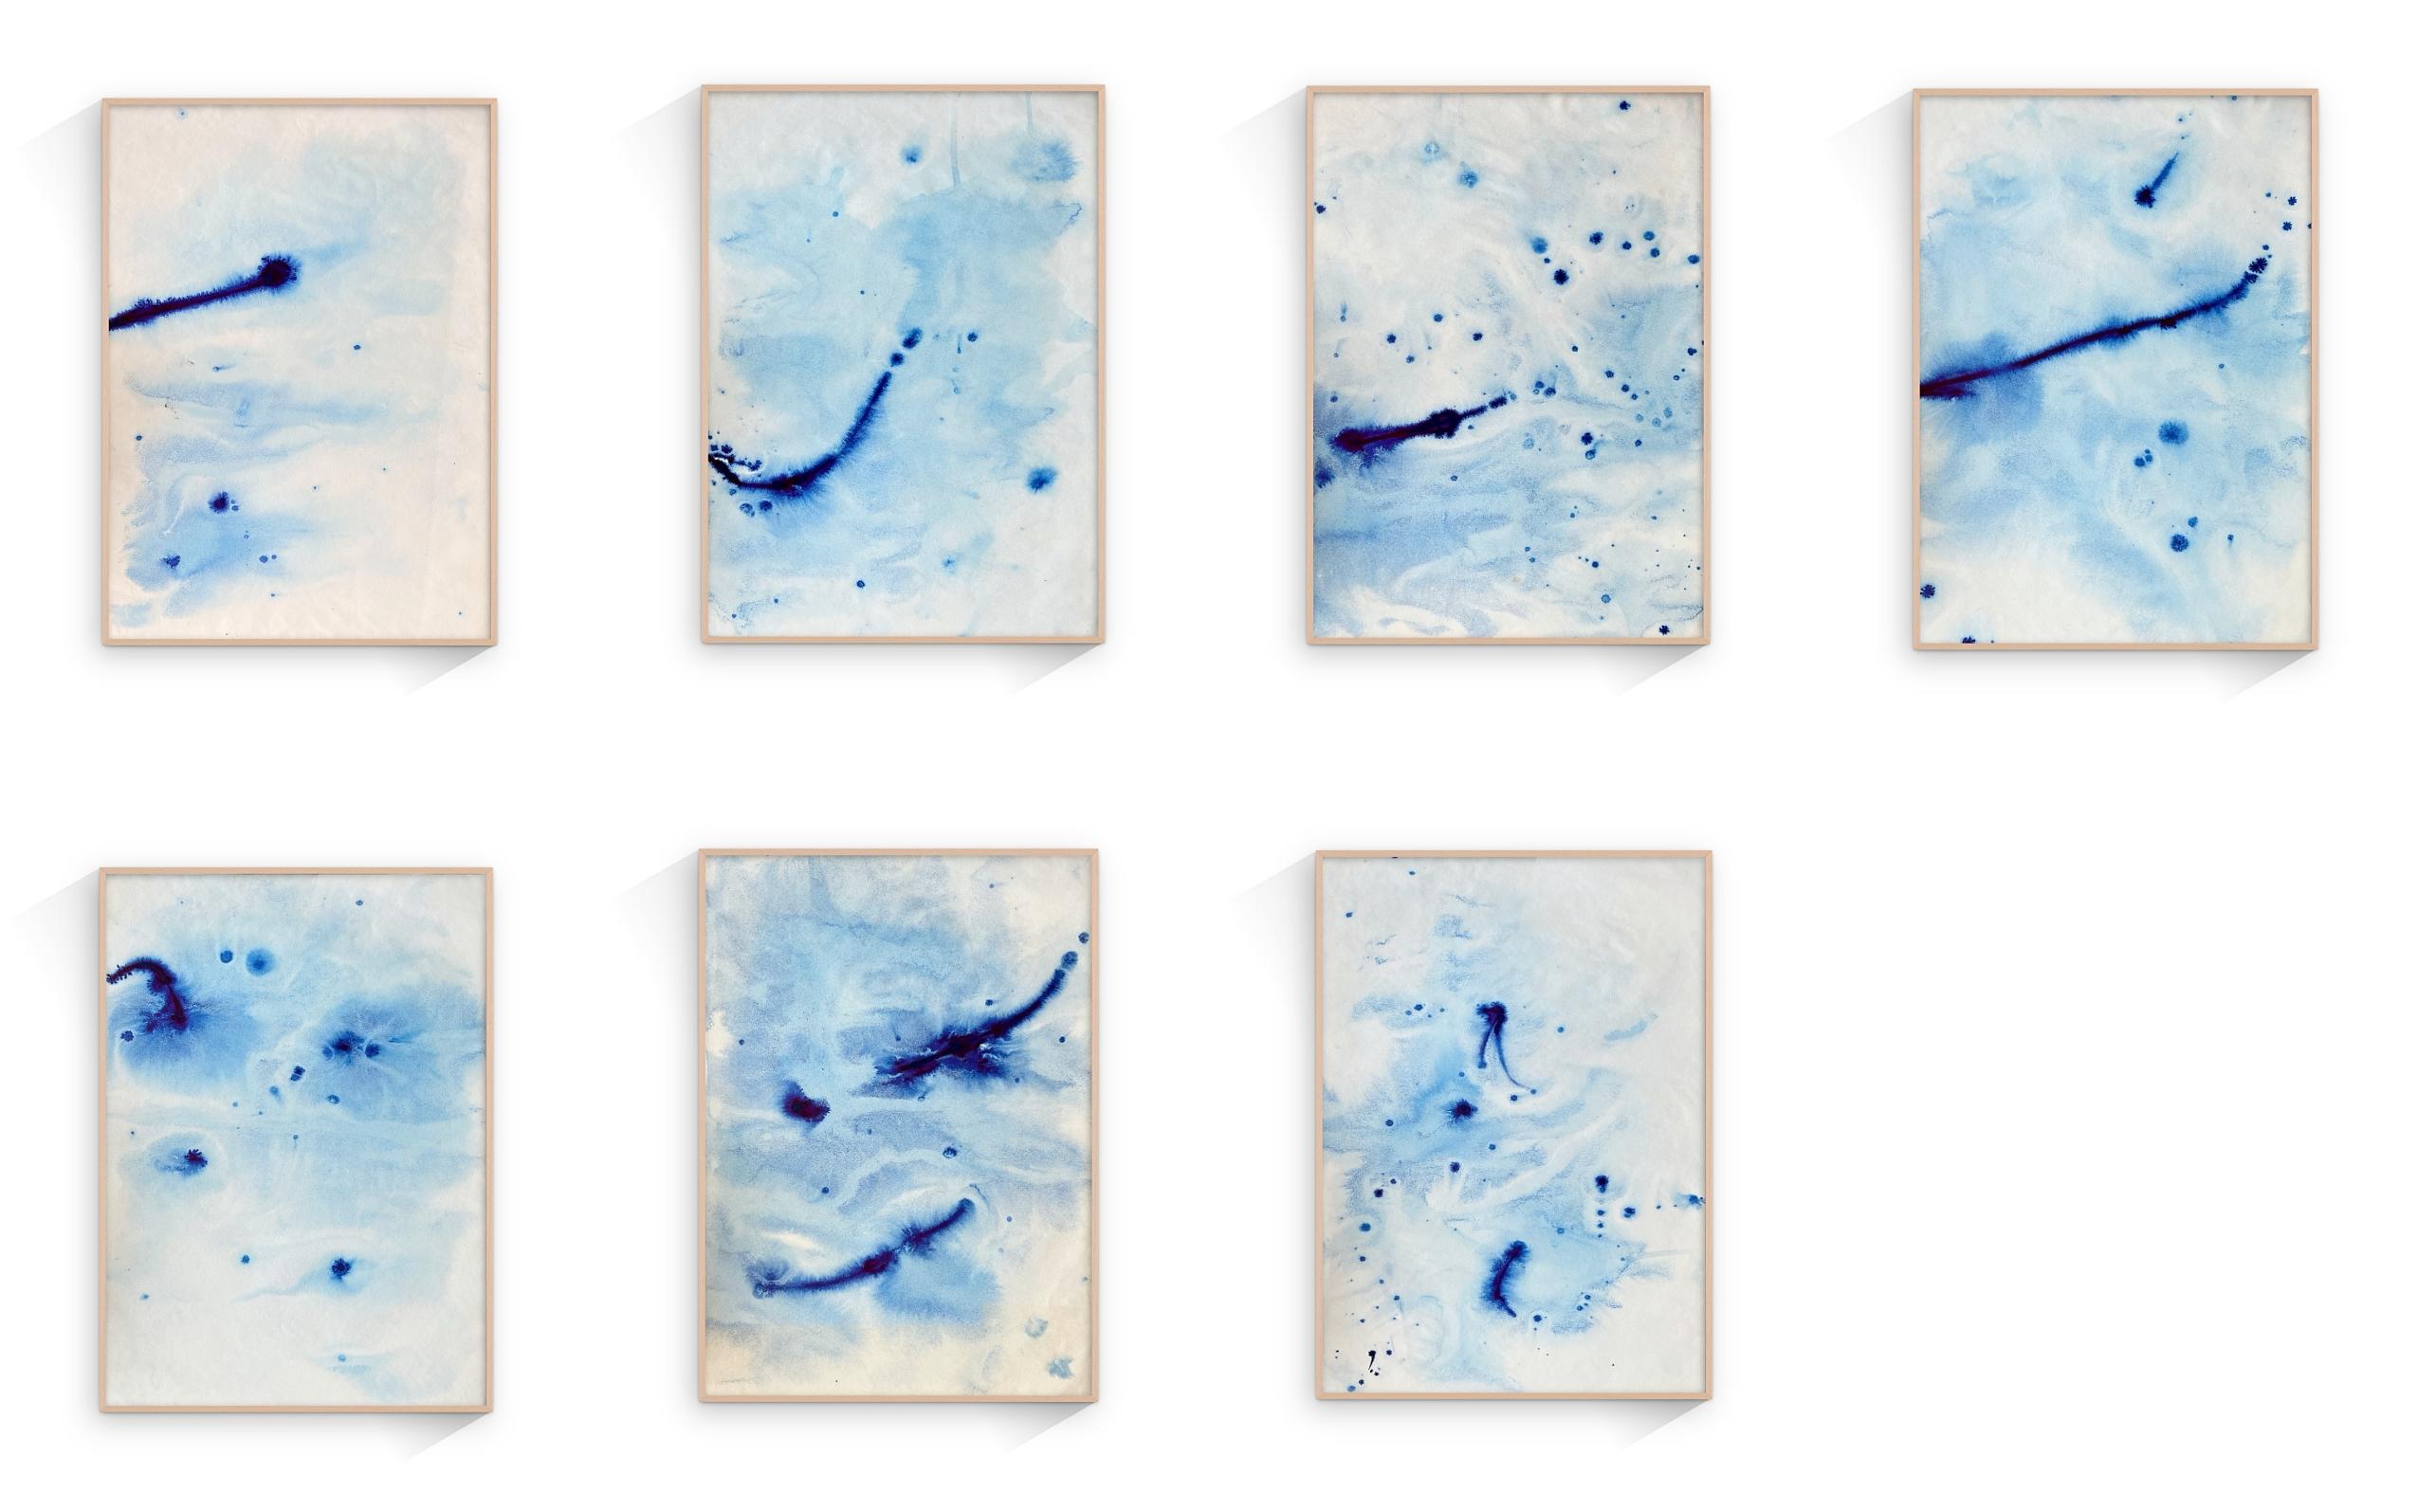 Mittelmeerblaue Meereswellen, handgefertigte Gemäldetinte, Calming Ripples, limitiert (Abstrakter Expressionismus), Painting, von TUSET